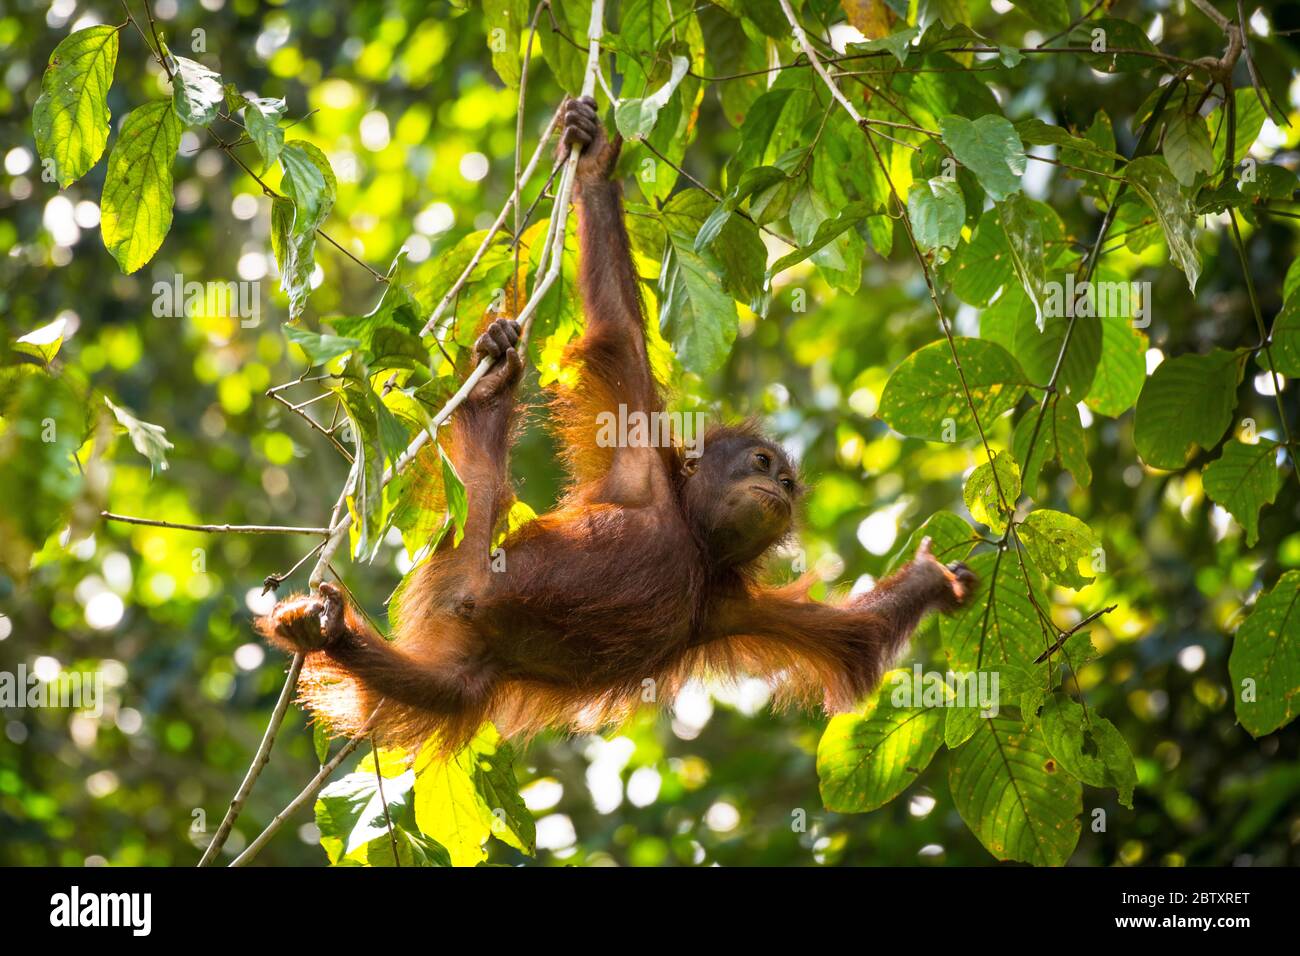 A baby orangutan hanging off branches in a tree, at the Kinabatangan River, Sabah, Borneo, Malaysia. Stock Photo